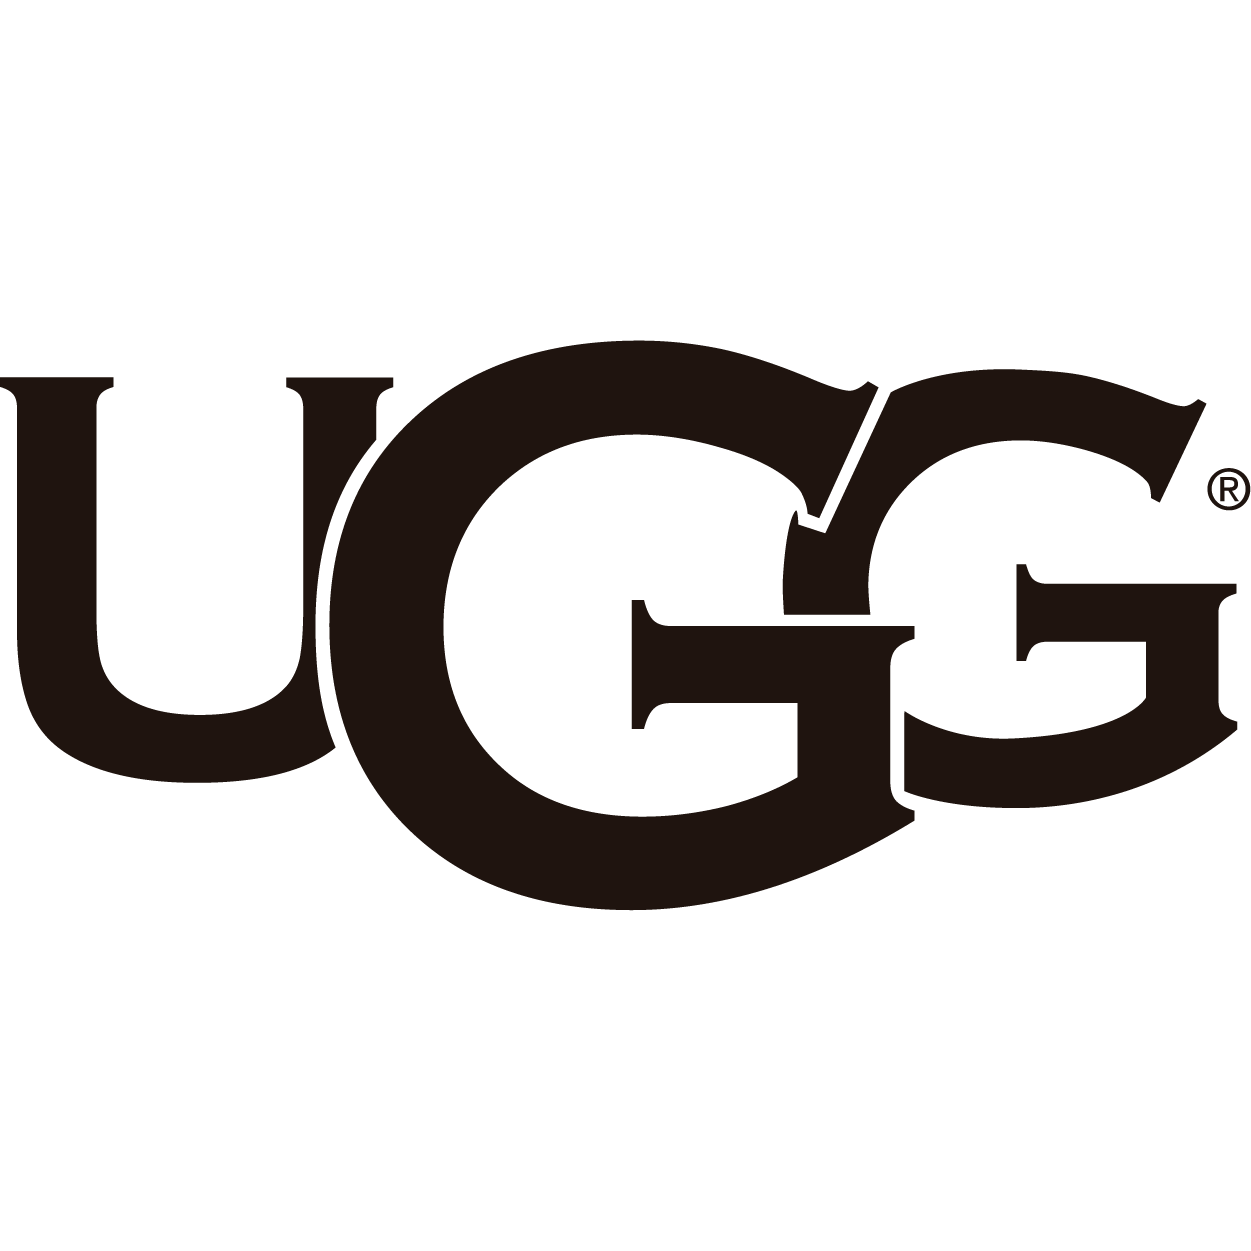 UGG